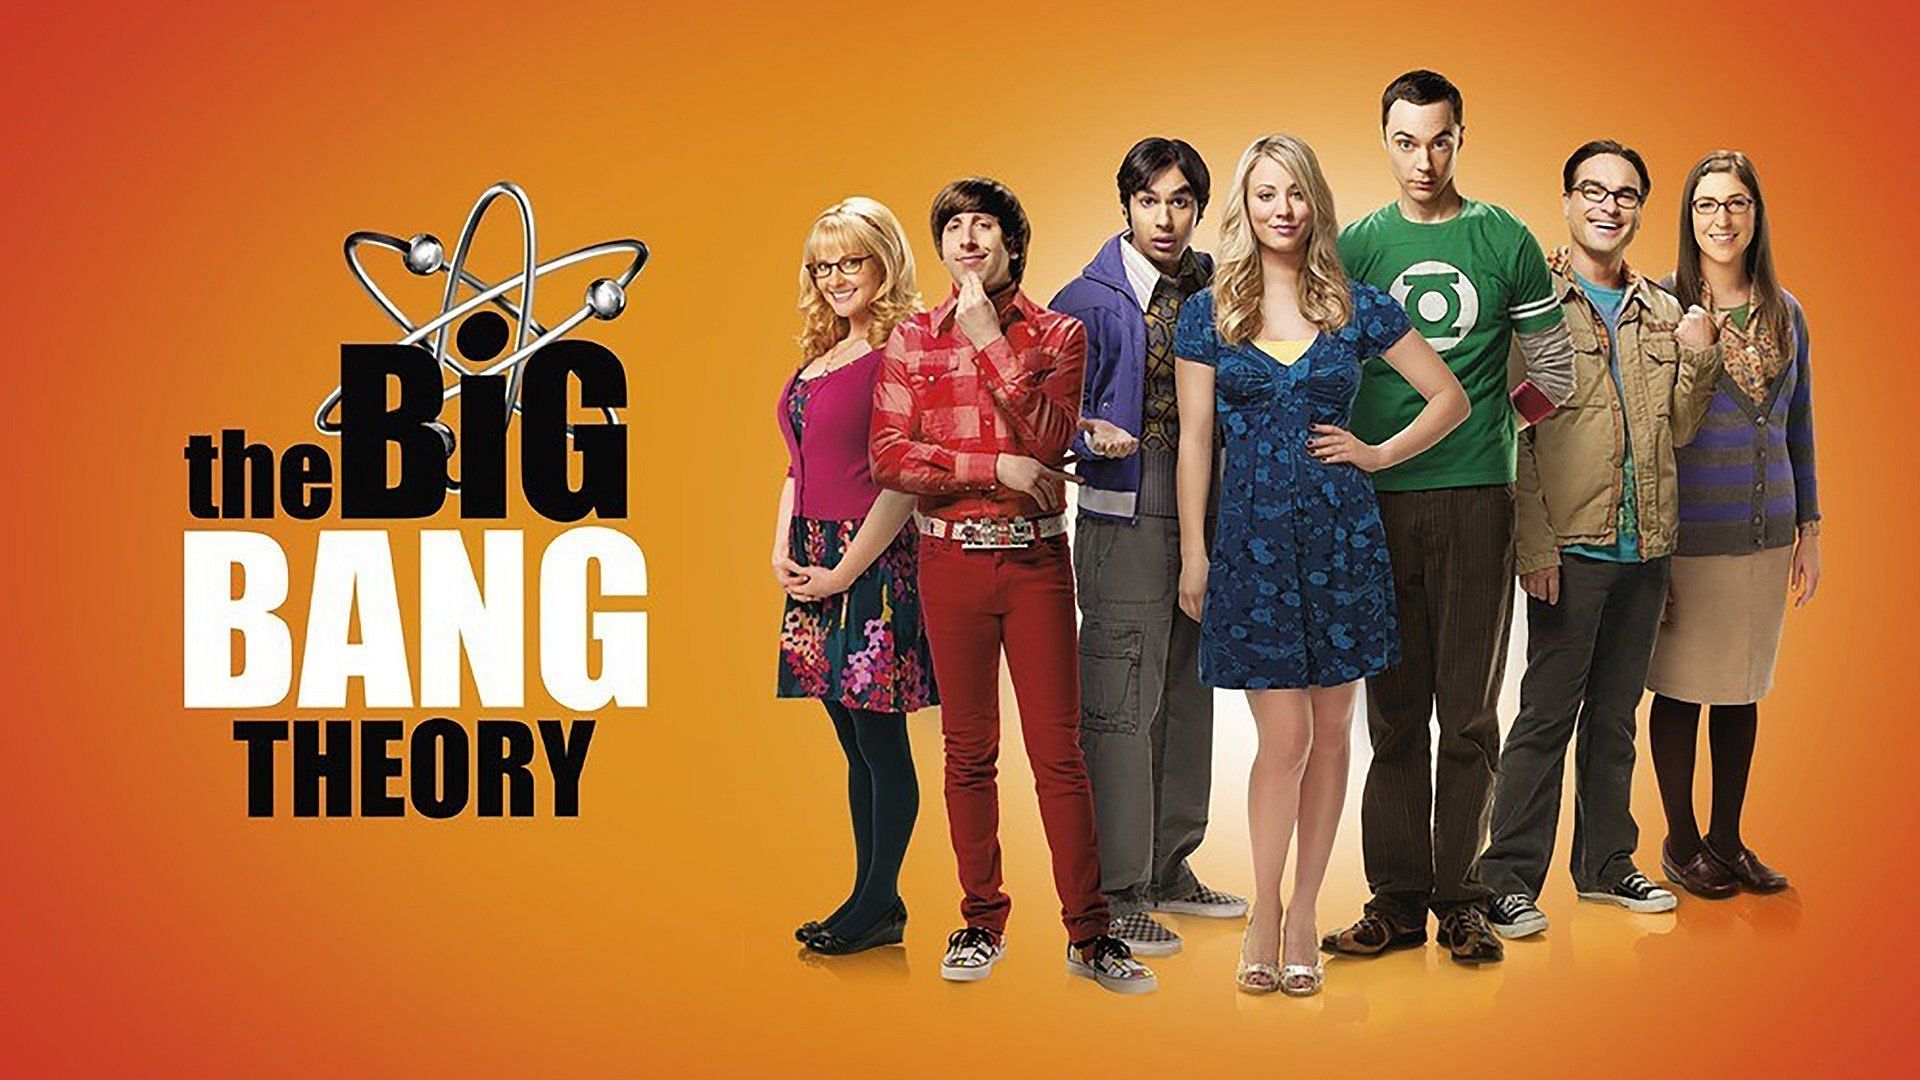 Tara Hernandez of The Big Bang Theory fame is the showrunner. (Photo via Rotten Tomatoes)